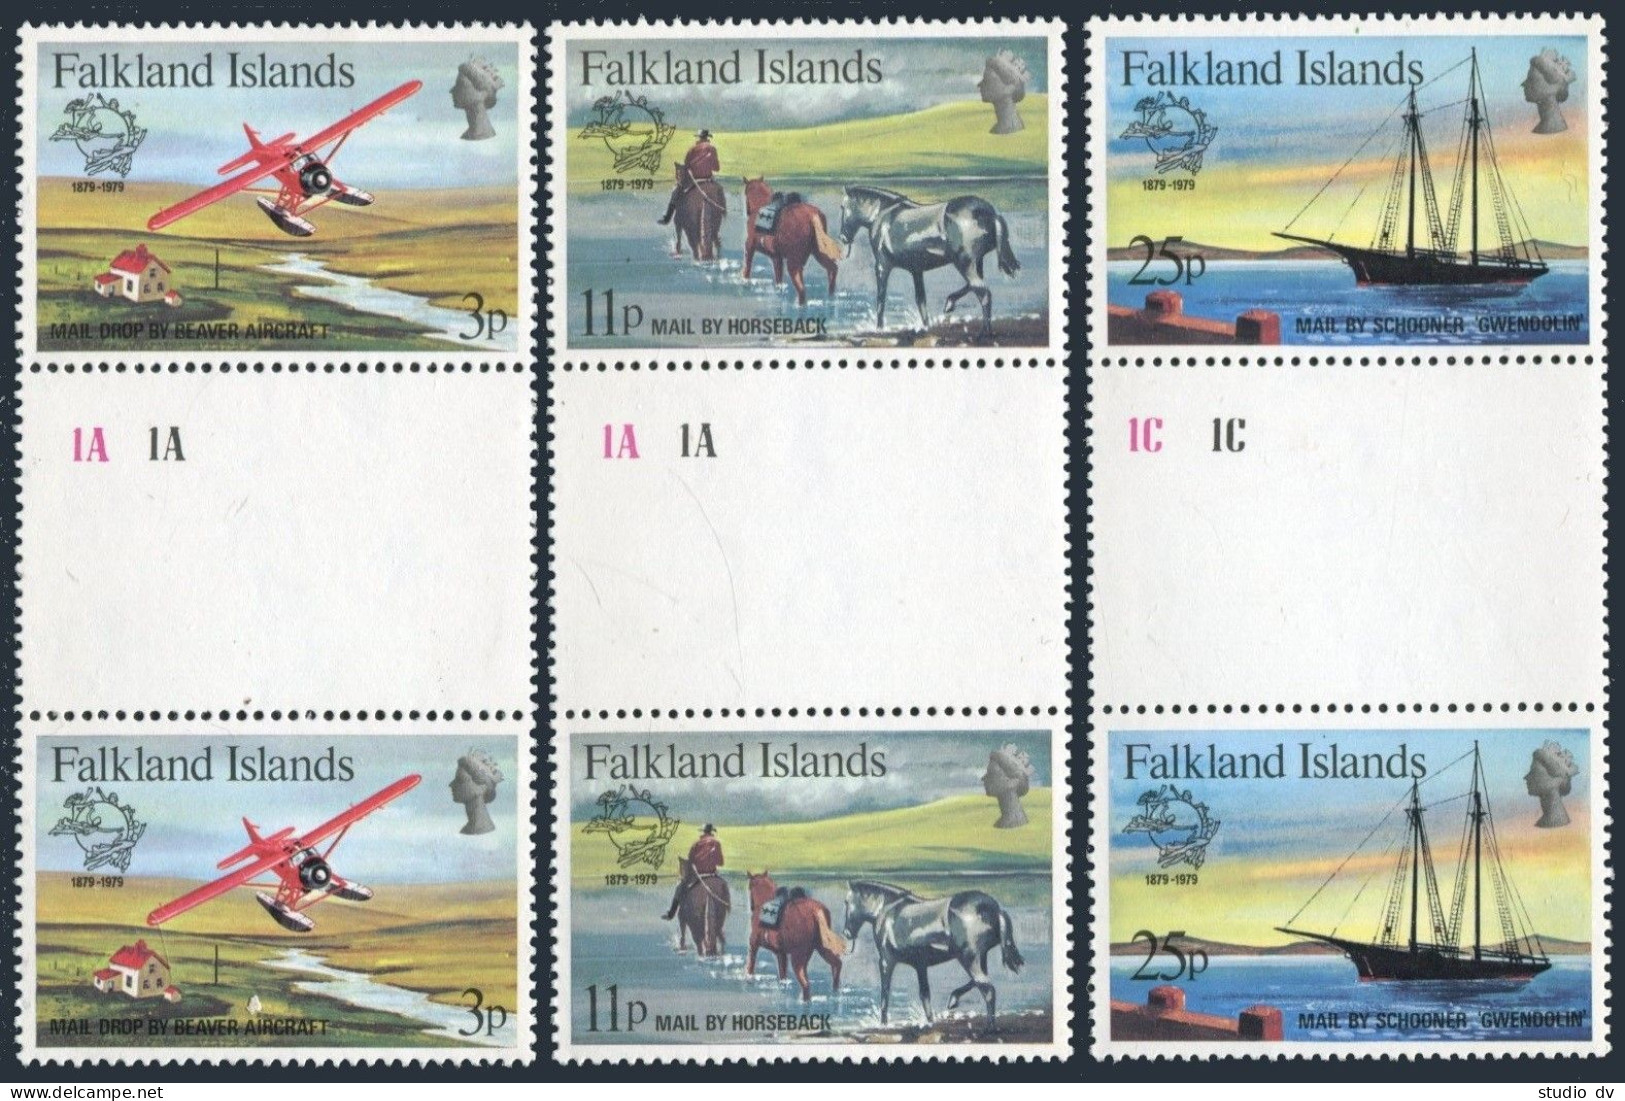 Falkland 295-297 Gutter, MNH. Michel 292-294. UPU Membership-100, 1979. - Falkland Islands